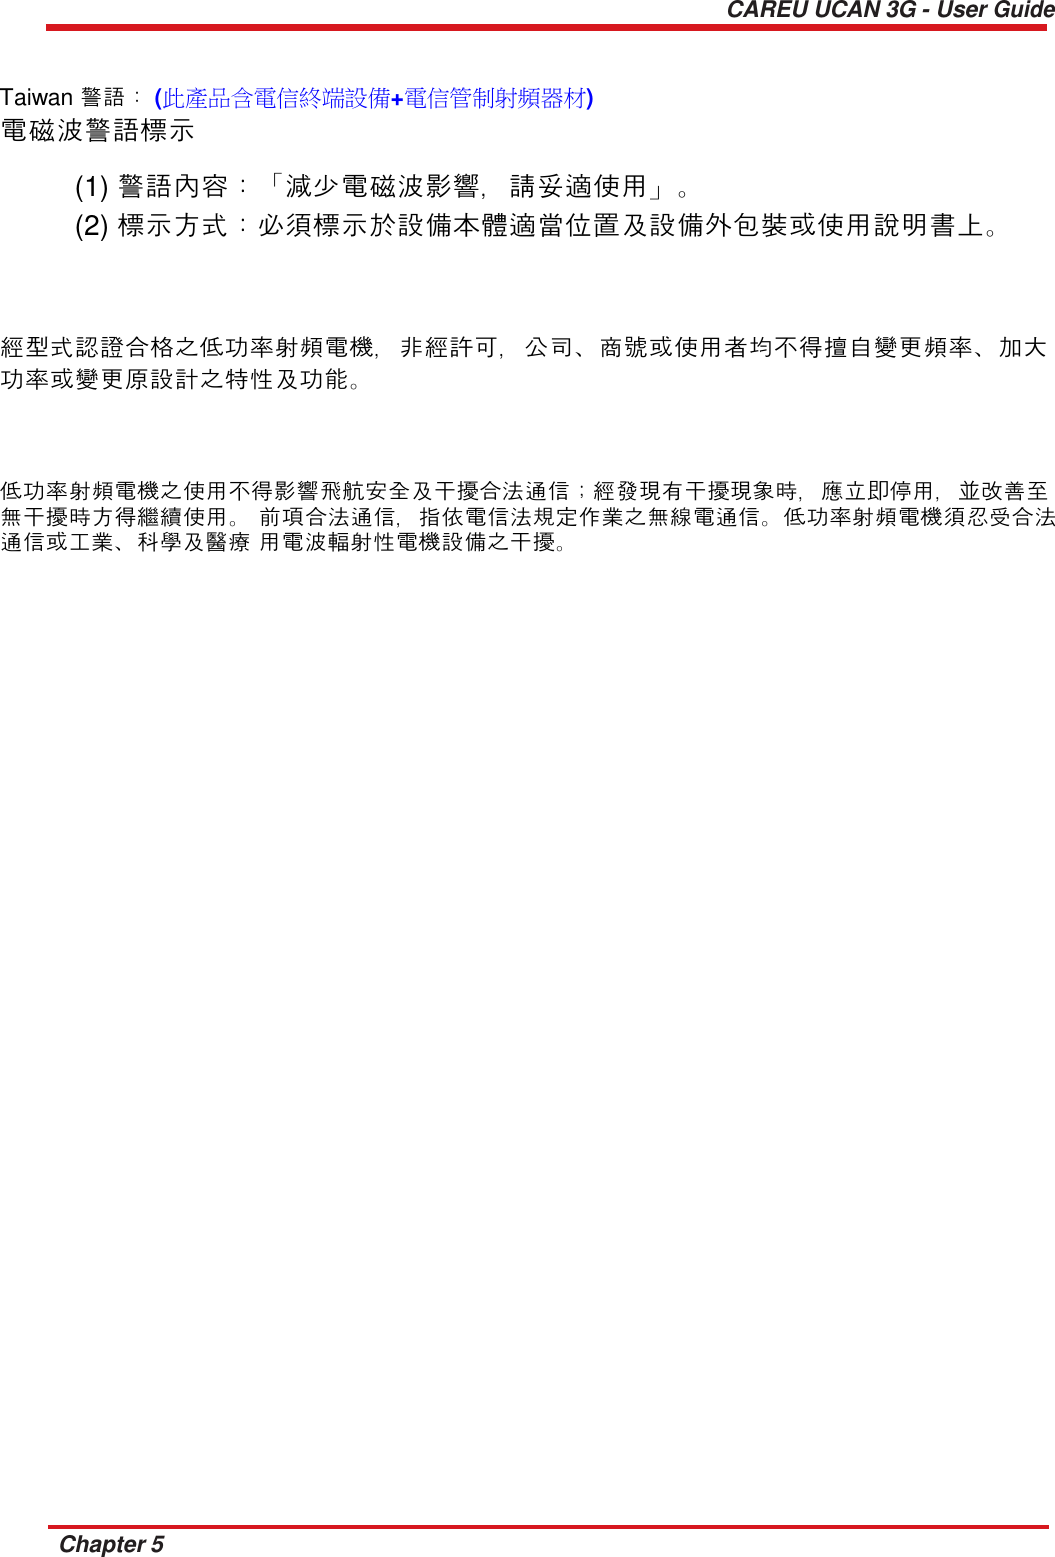   CAREU UCAN 3G - User Guide    Taiwan 警語： (此產品含電信終端設備+電信管制射頻器材) 電磁波警語標示  (1) 警語內容：「減少電磁波影響，請妥適使用」。 (2) 標示方式：必須標示於設備本體適當位置及設備外包裝或使用說明書上。     經型式認證合格之低功率射頻電機，非經許可，公司、商號或使用者均不得擅自變更頻率、加大 功率或變更原設計之特性及功能。     低功率射頻電機之使用不得影響飛航安全及干擾合法通信；經發現有干擾現象時，應立即停用，並改善至 無干擾時方得繼續使用。 前項合法通信，指依電信法規定作業之無線電通信。低功率射頻電機須忍受合法通信或工業、科學及醫療 用電波輻射性電機設備之干擾。                                                Chapter 5 